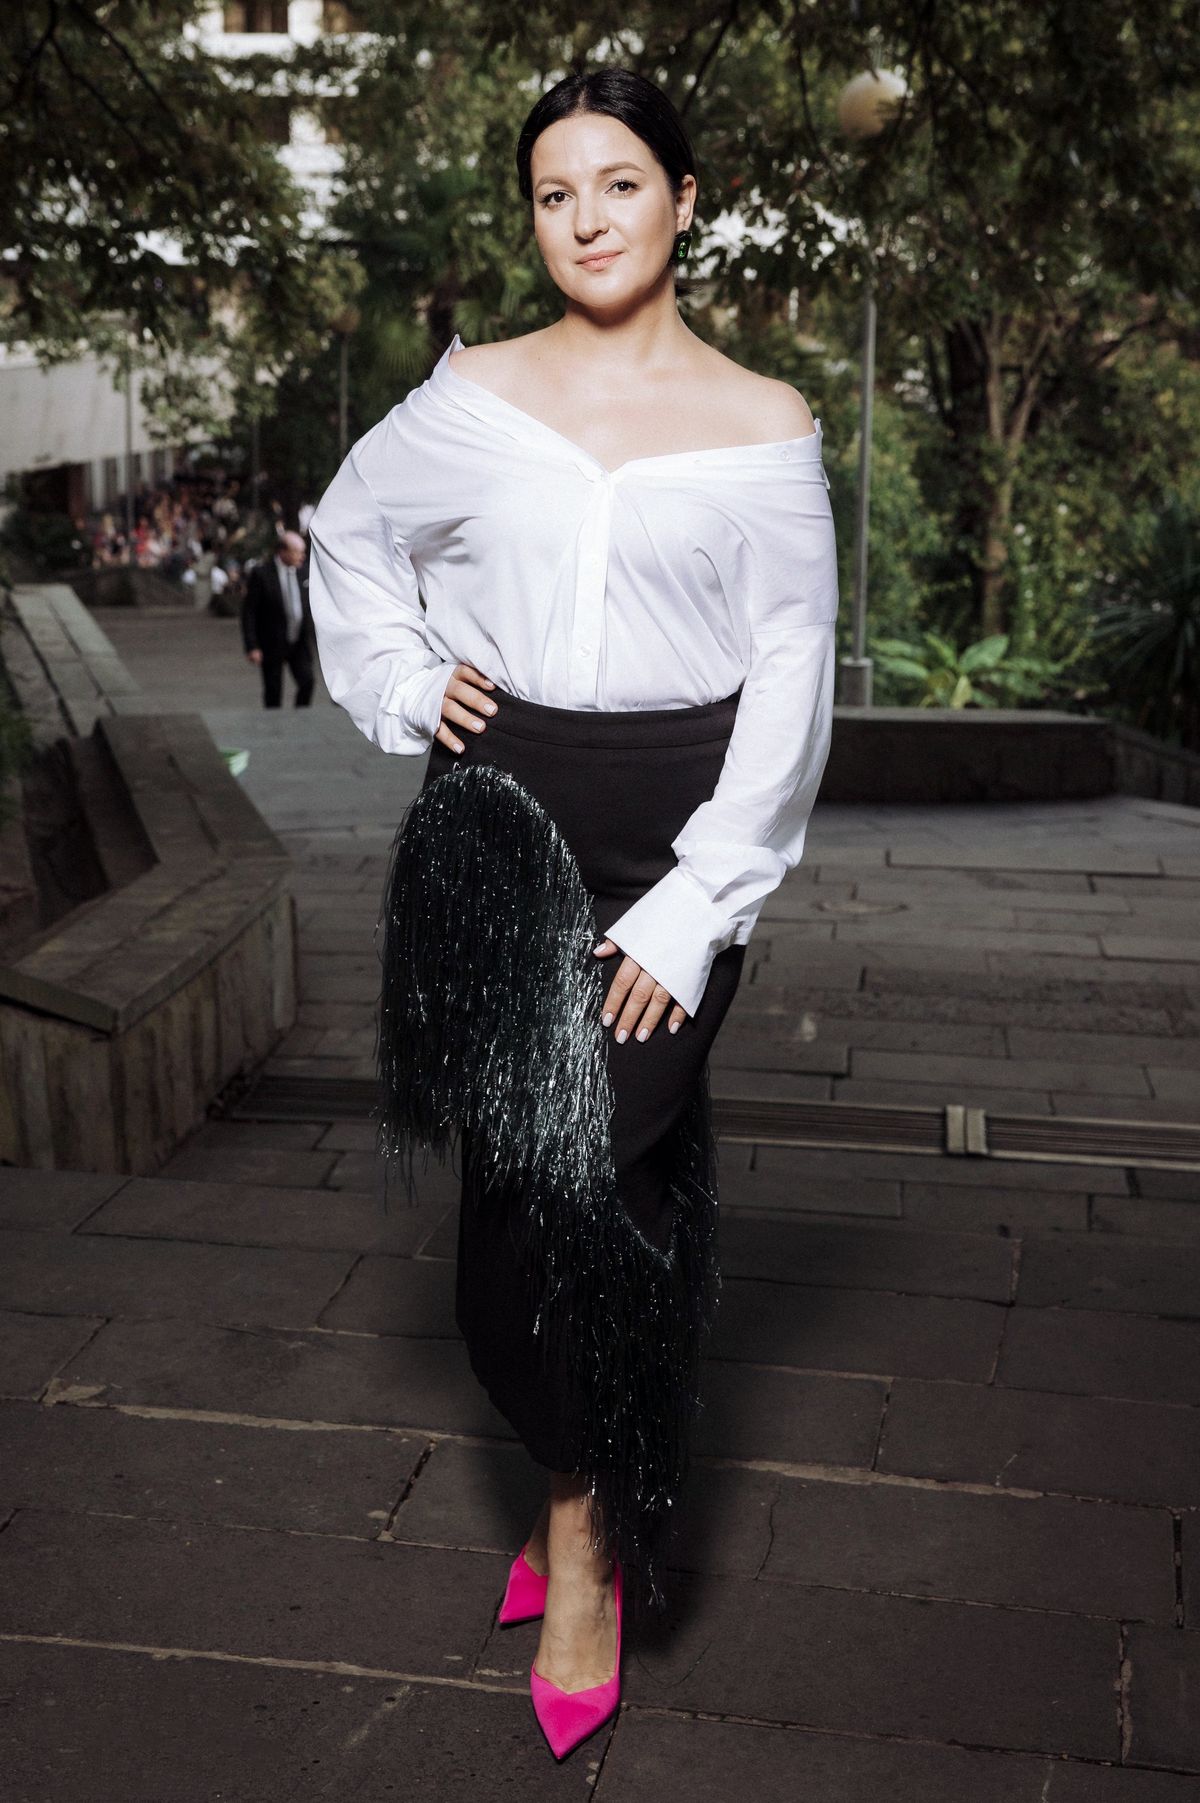 Оксана Михеева на церемонии открытия кинофестиваля «Кинотавр» 2021, 18 сентября 2021 г.